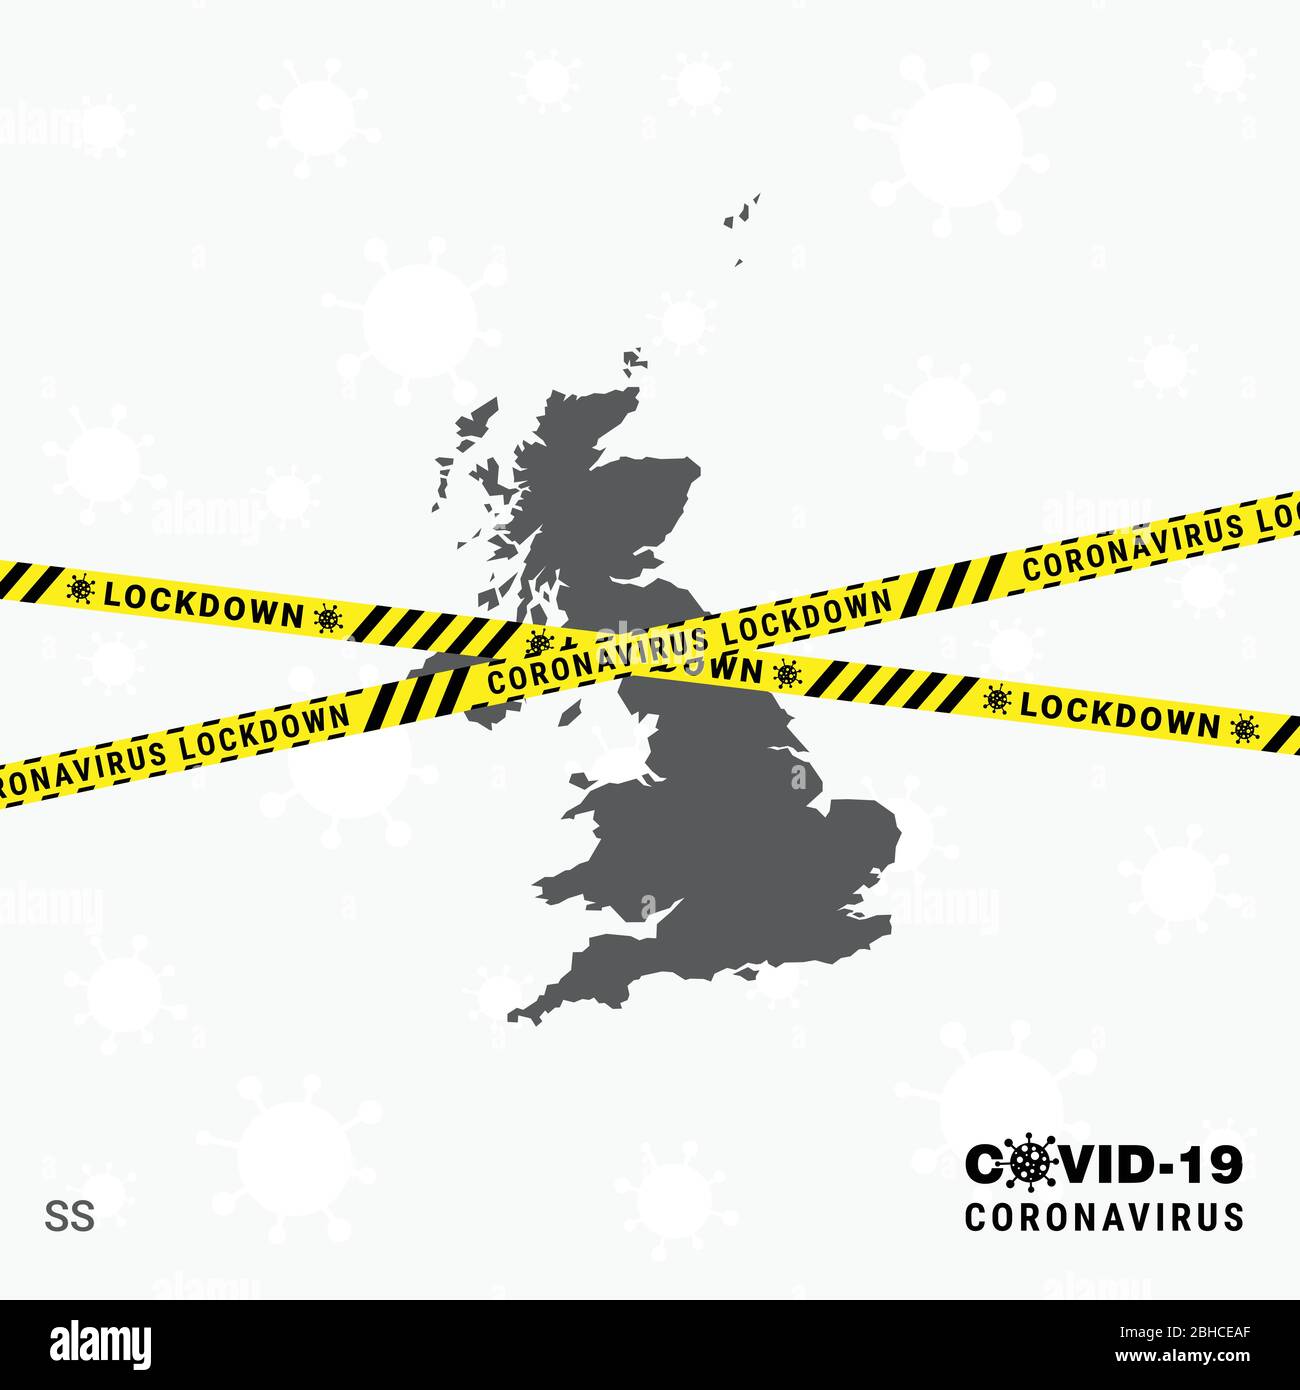 United Kingdomcountry map Lockdown template for Coronavirus pandemic for stop virus transmission. COVID 19 Awareness Template Stock Vector